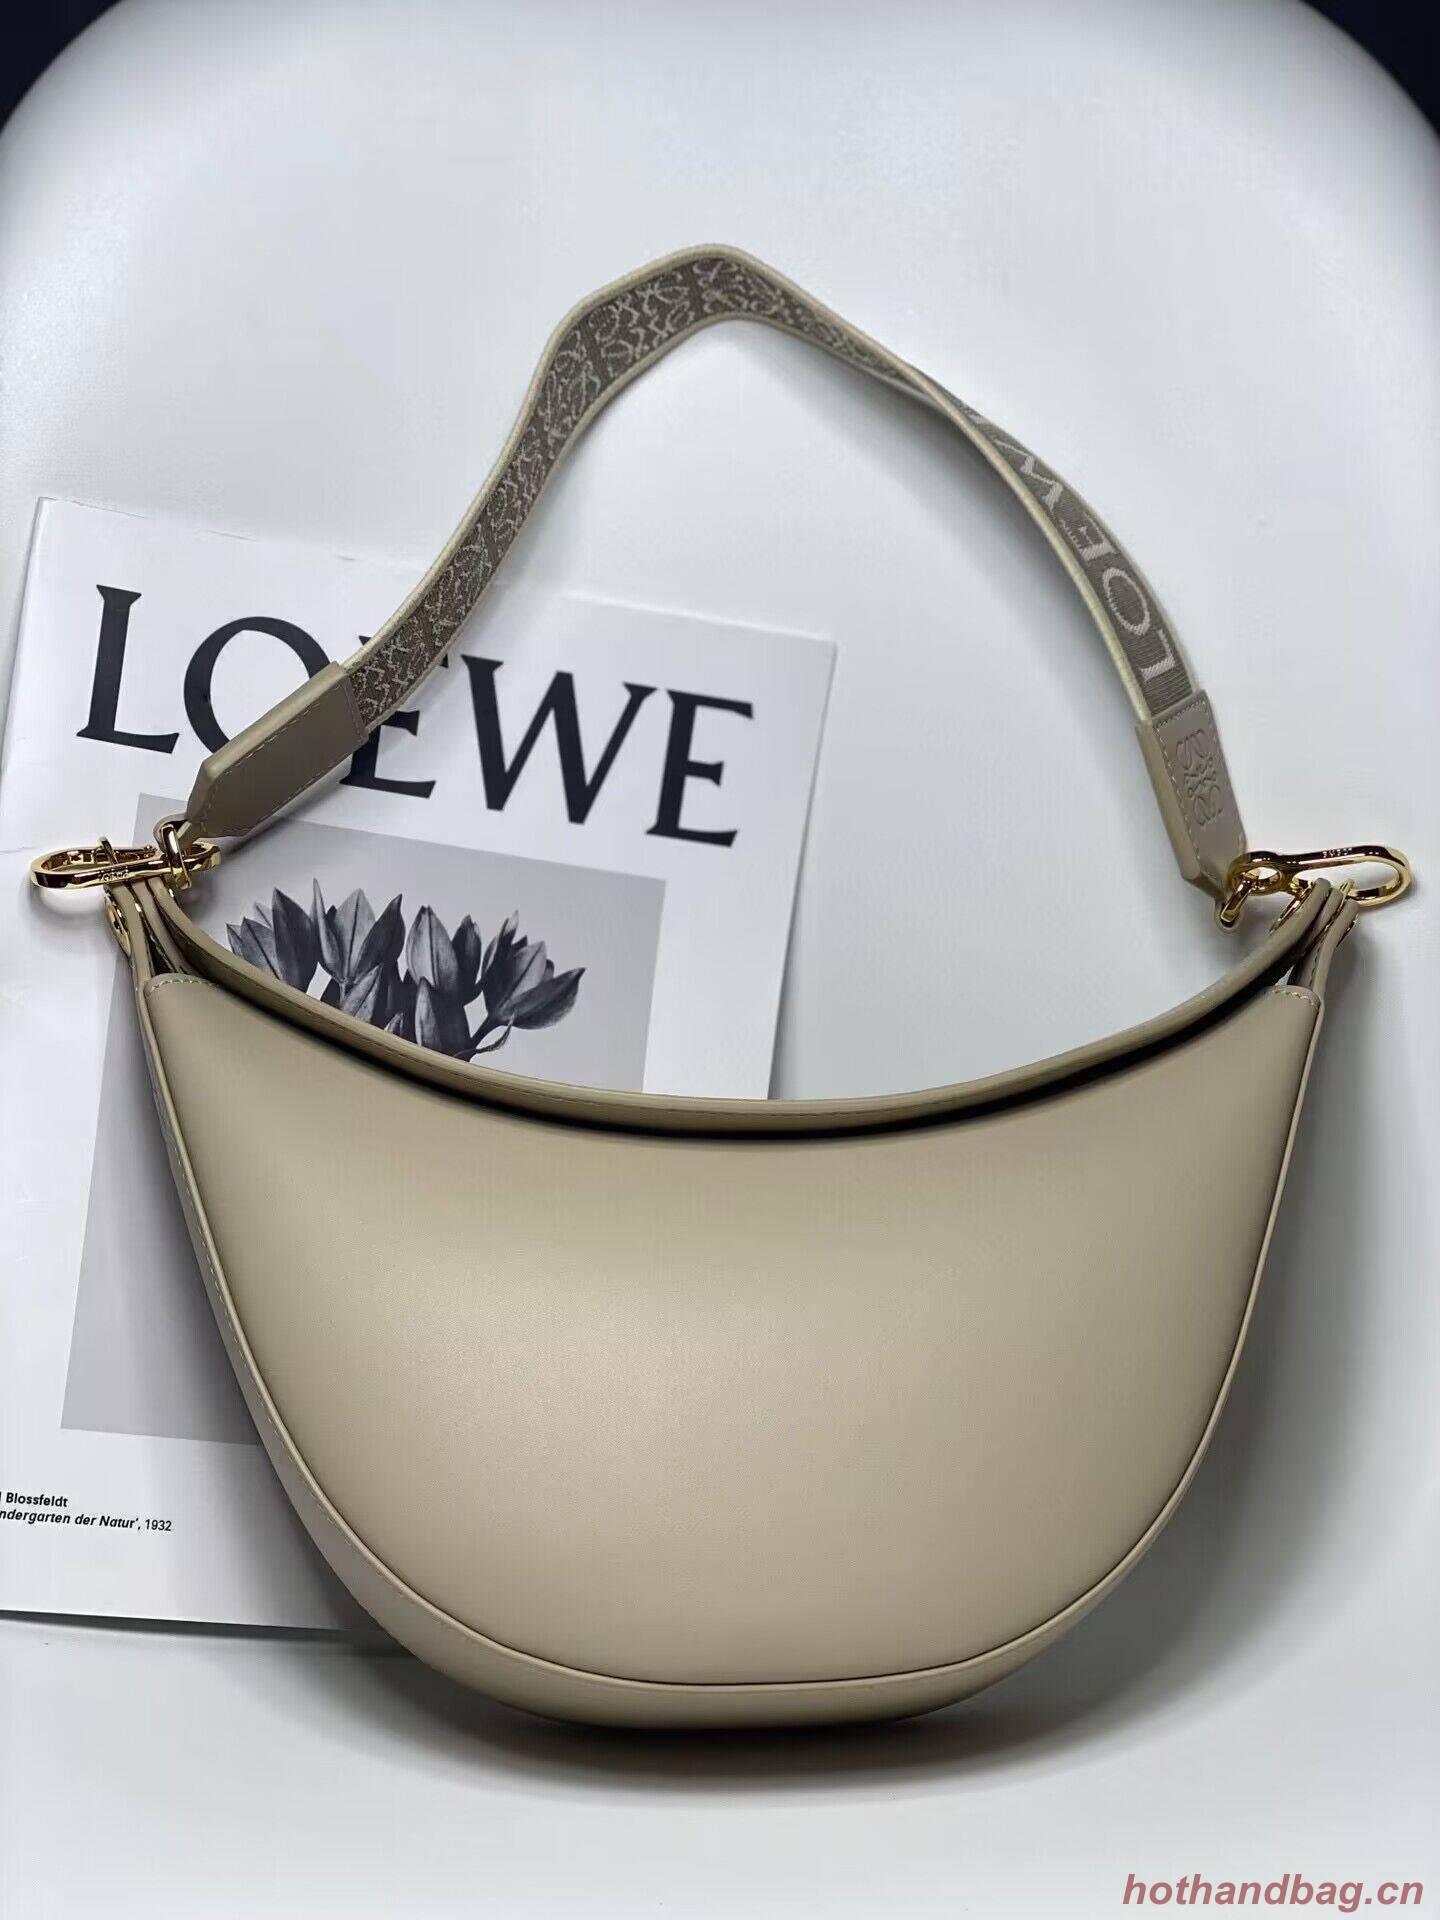 Loewe Original Leather Shoulder Handbag 3073 Gray